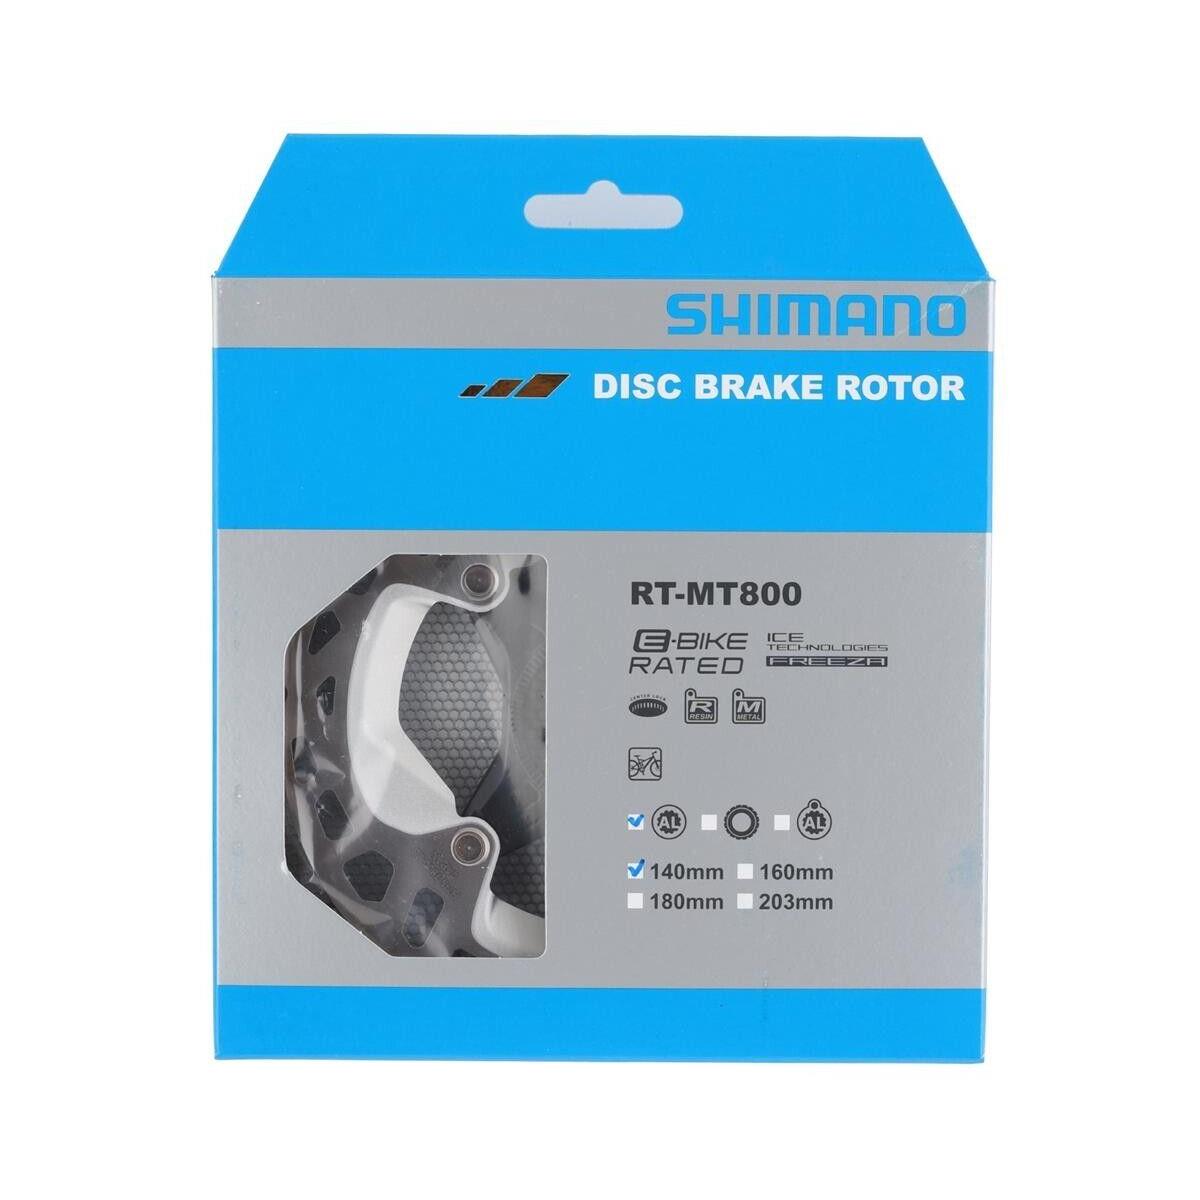 Shimano Ultegra SM-RT800 Disc Brake Rotor 140MM Centerlock IRTMT800SS